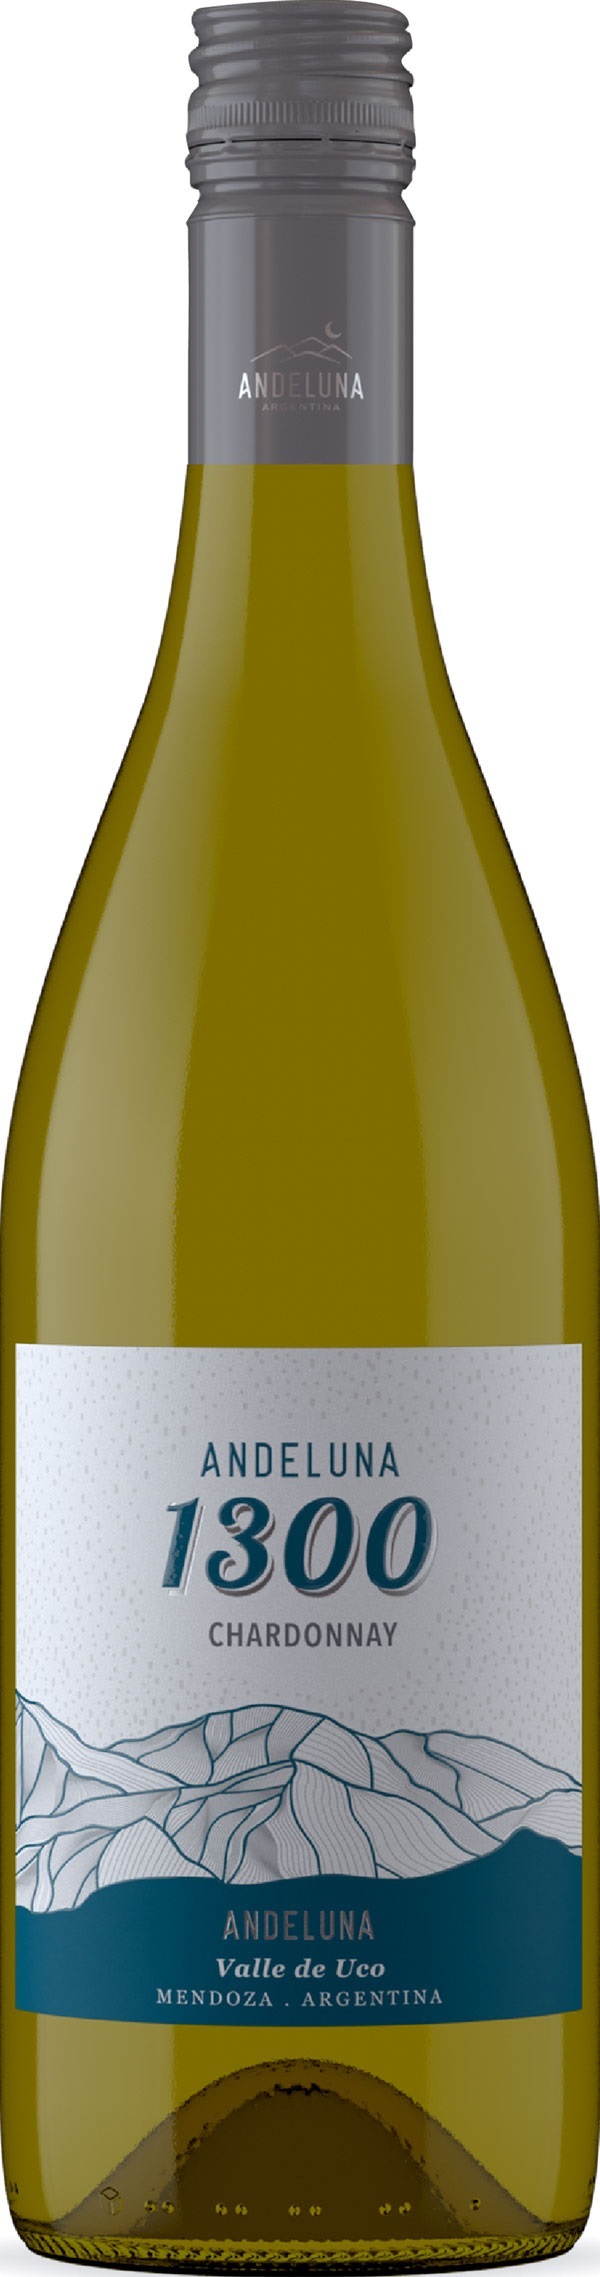 Chardonnay Andeluna 1300